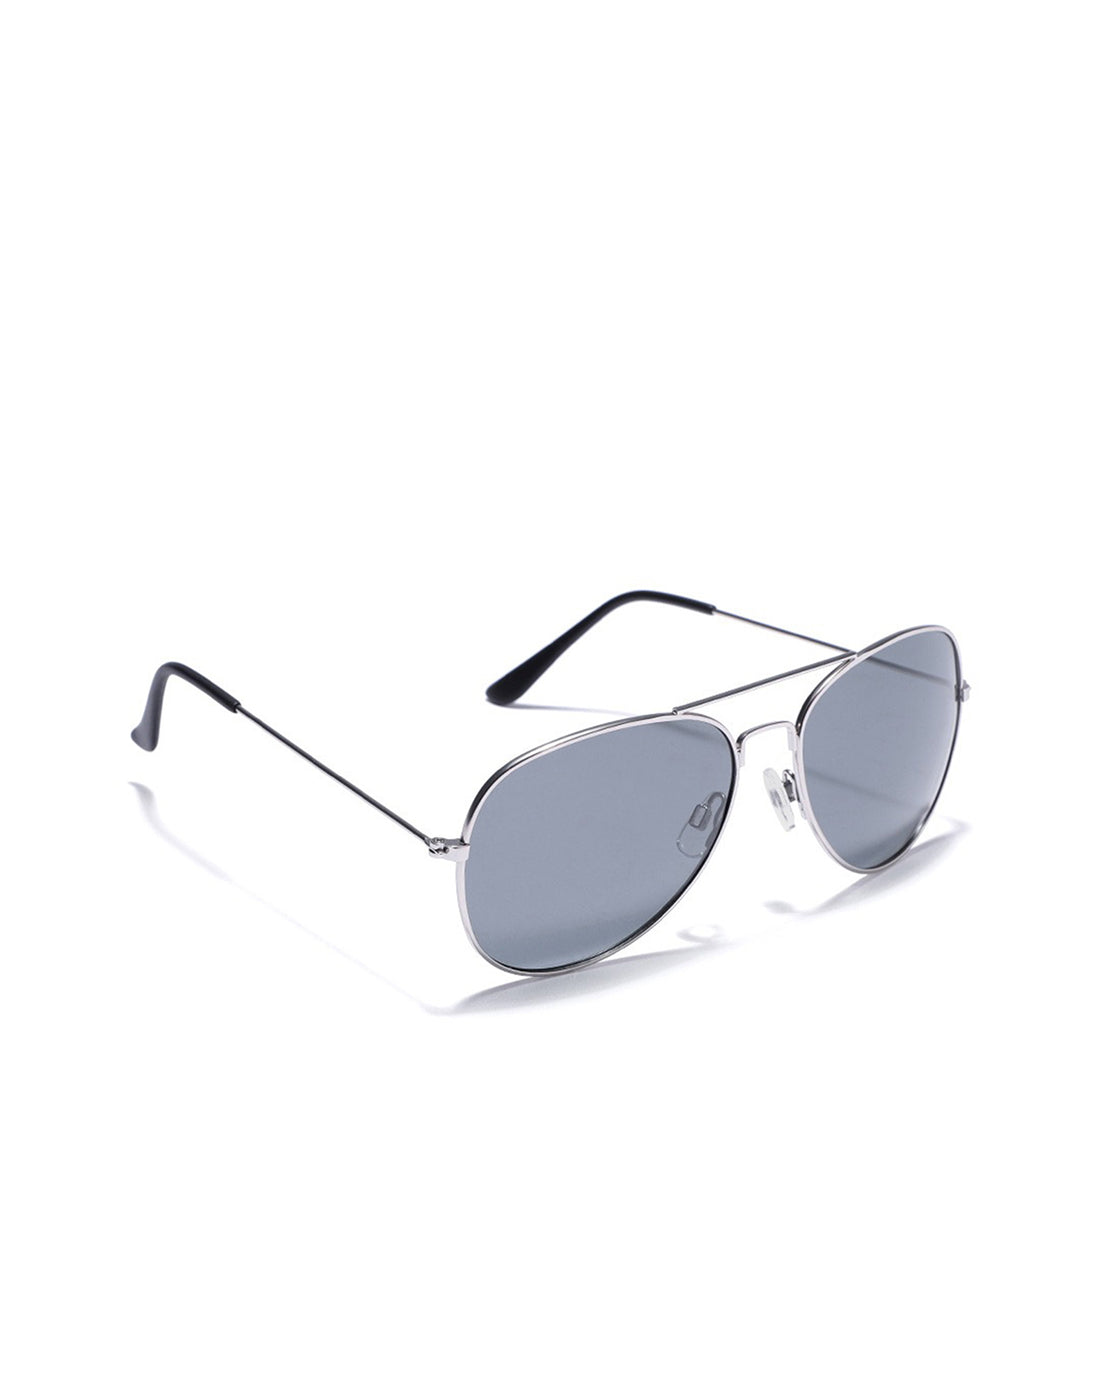 Carlton London Aviator Sunglasses With UV Protected Lens For Men